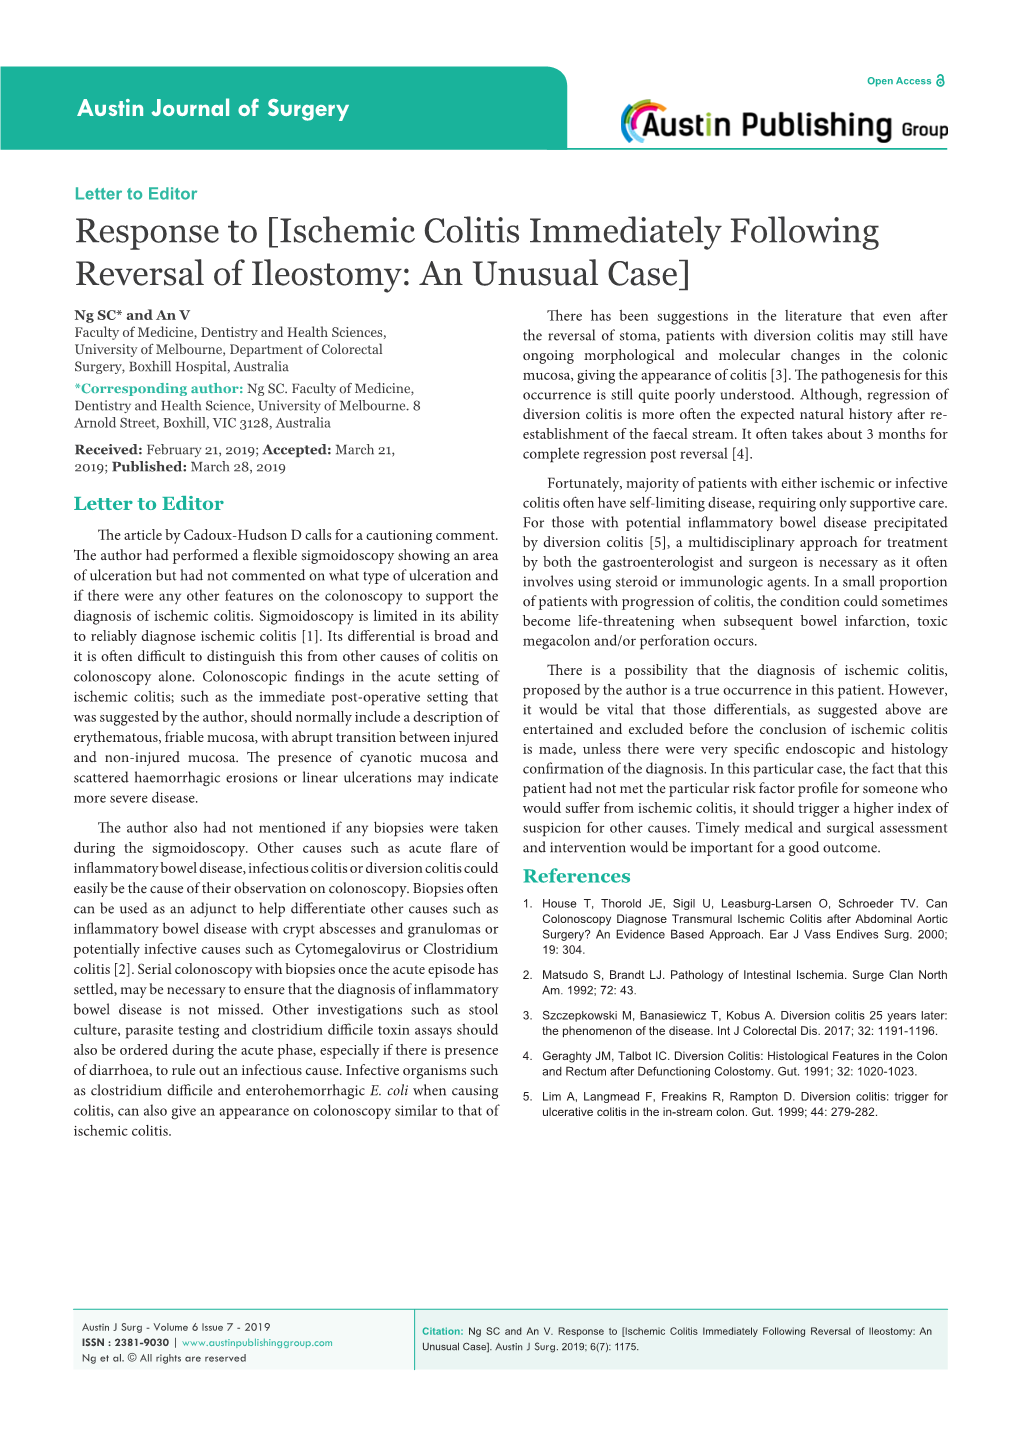 Ischemic Colitis Immediately Following Reversal of Ileostomy: An